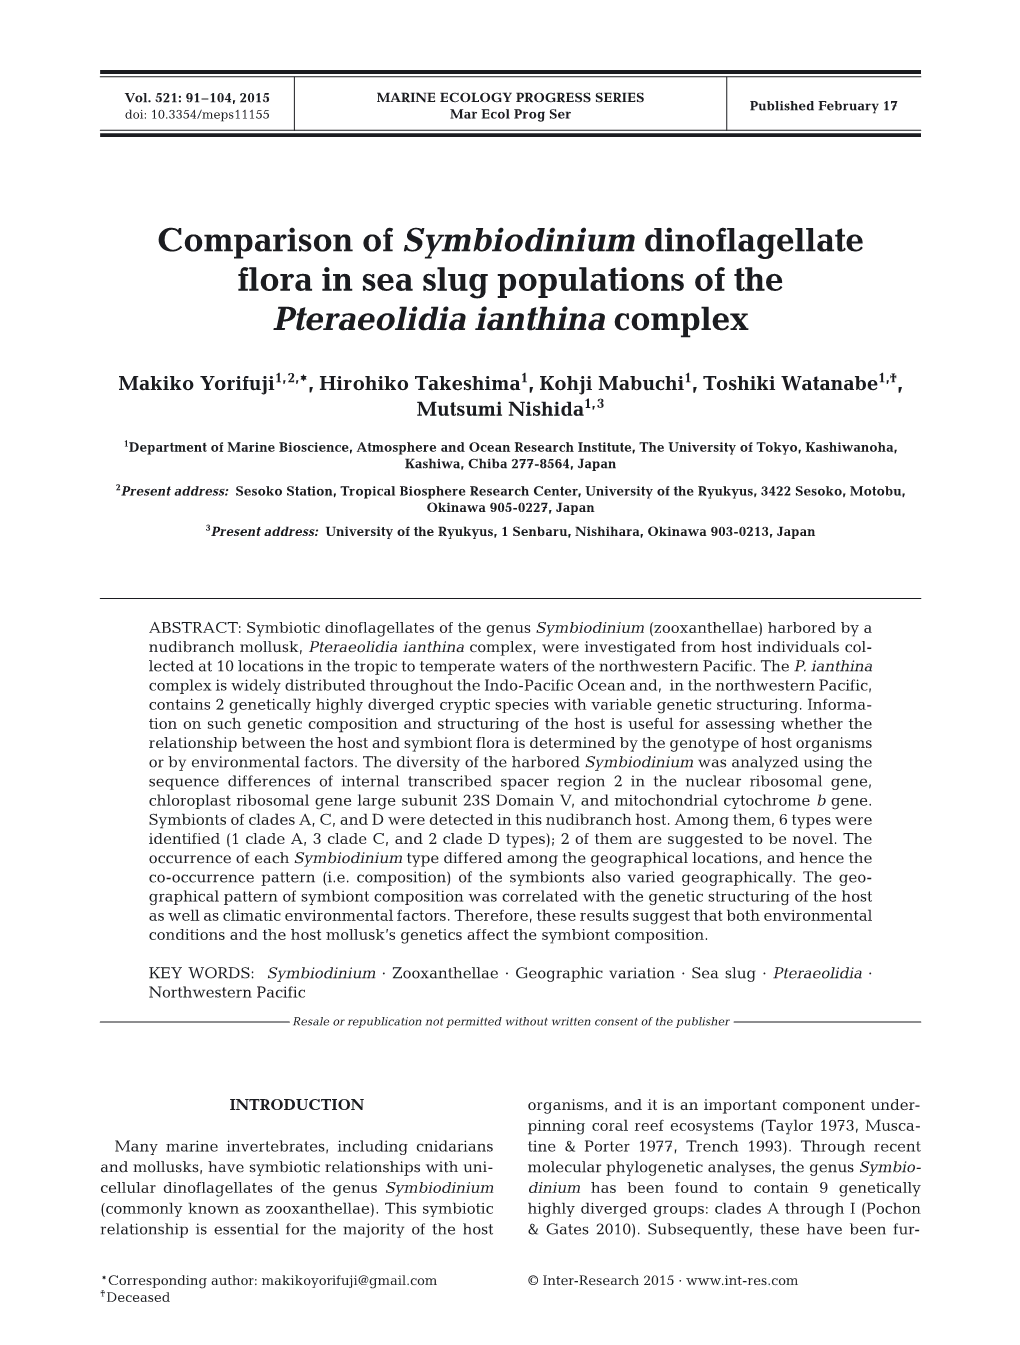 Comparison of Symbiodinium Dinoflagellate Flora in Sea Slug Populations of the Pteraeolidia Ianthina Complex